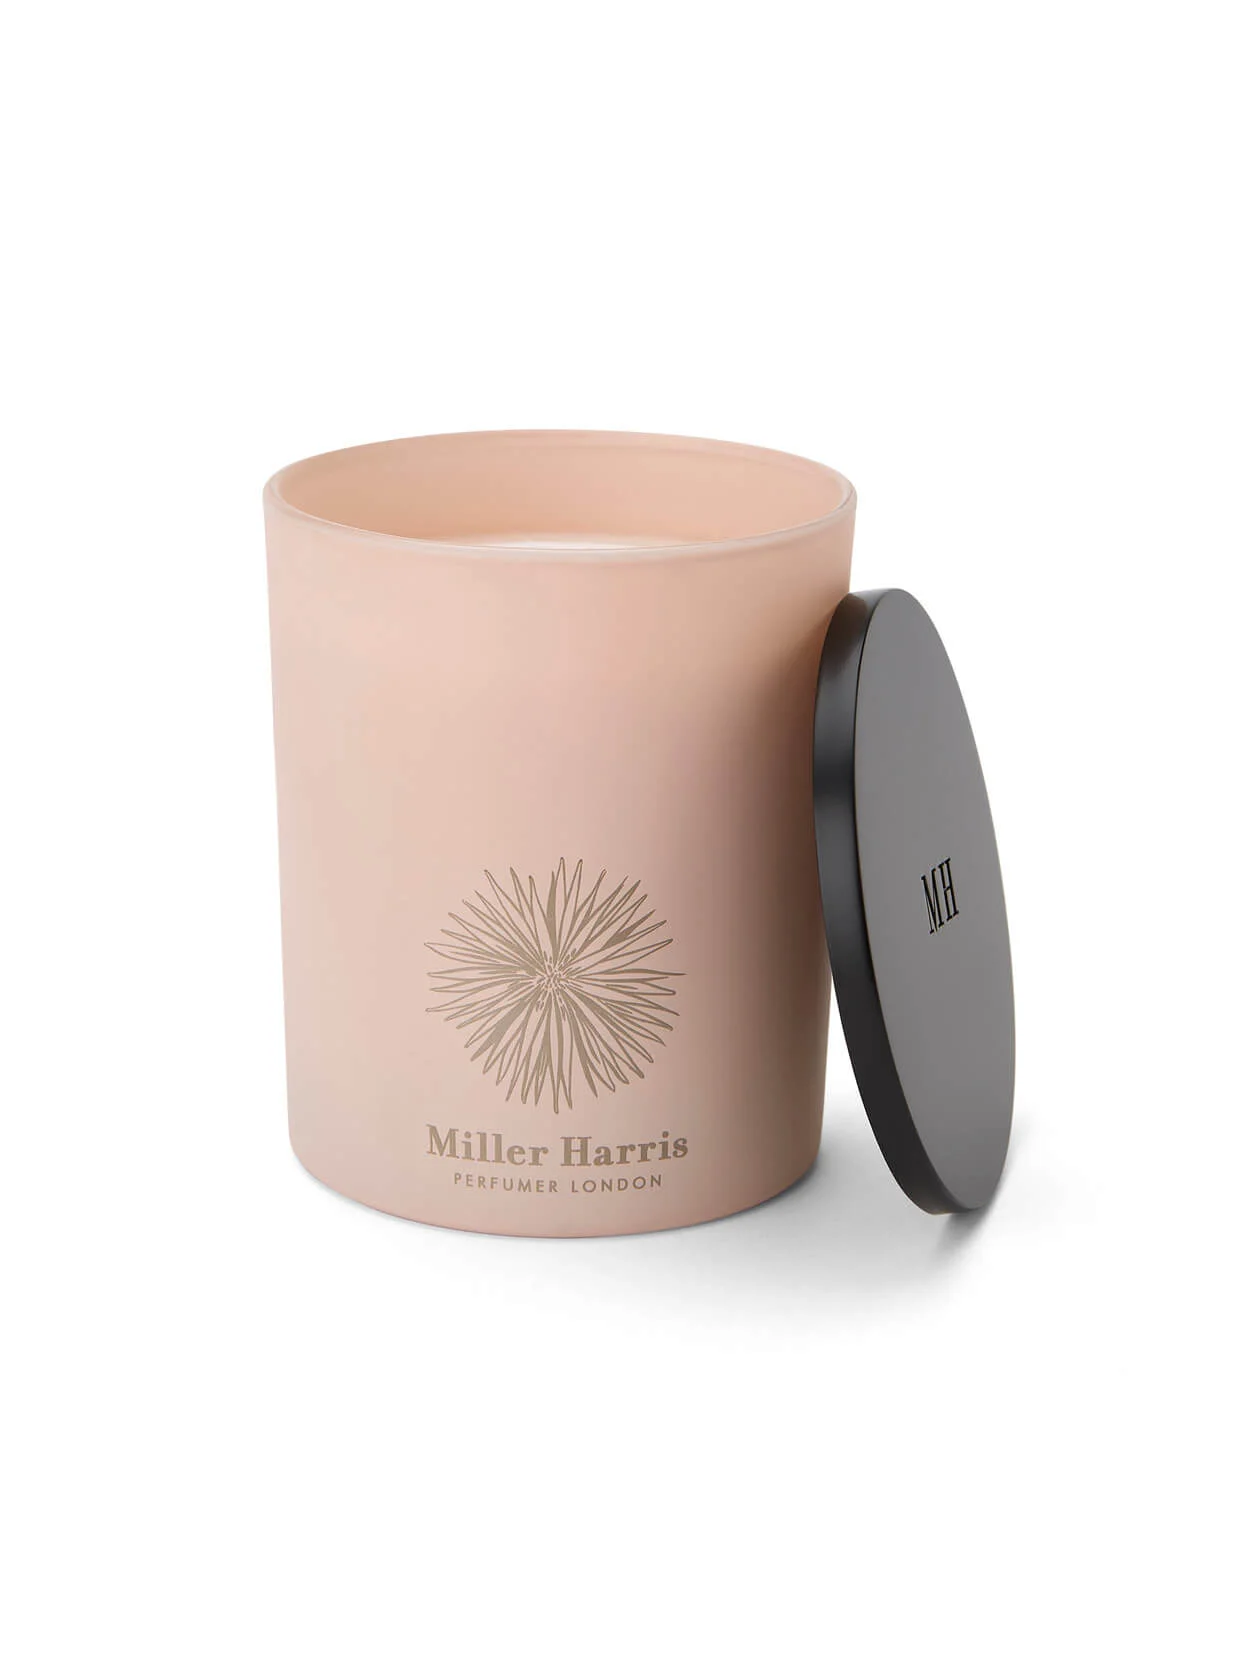 miller-harris-candle-lid3